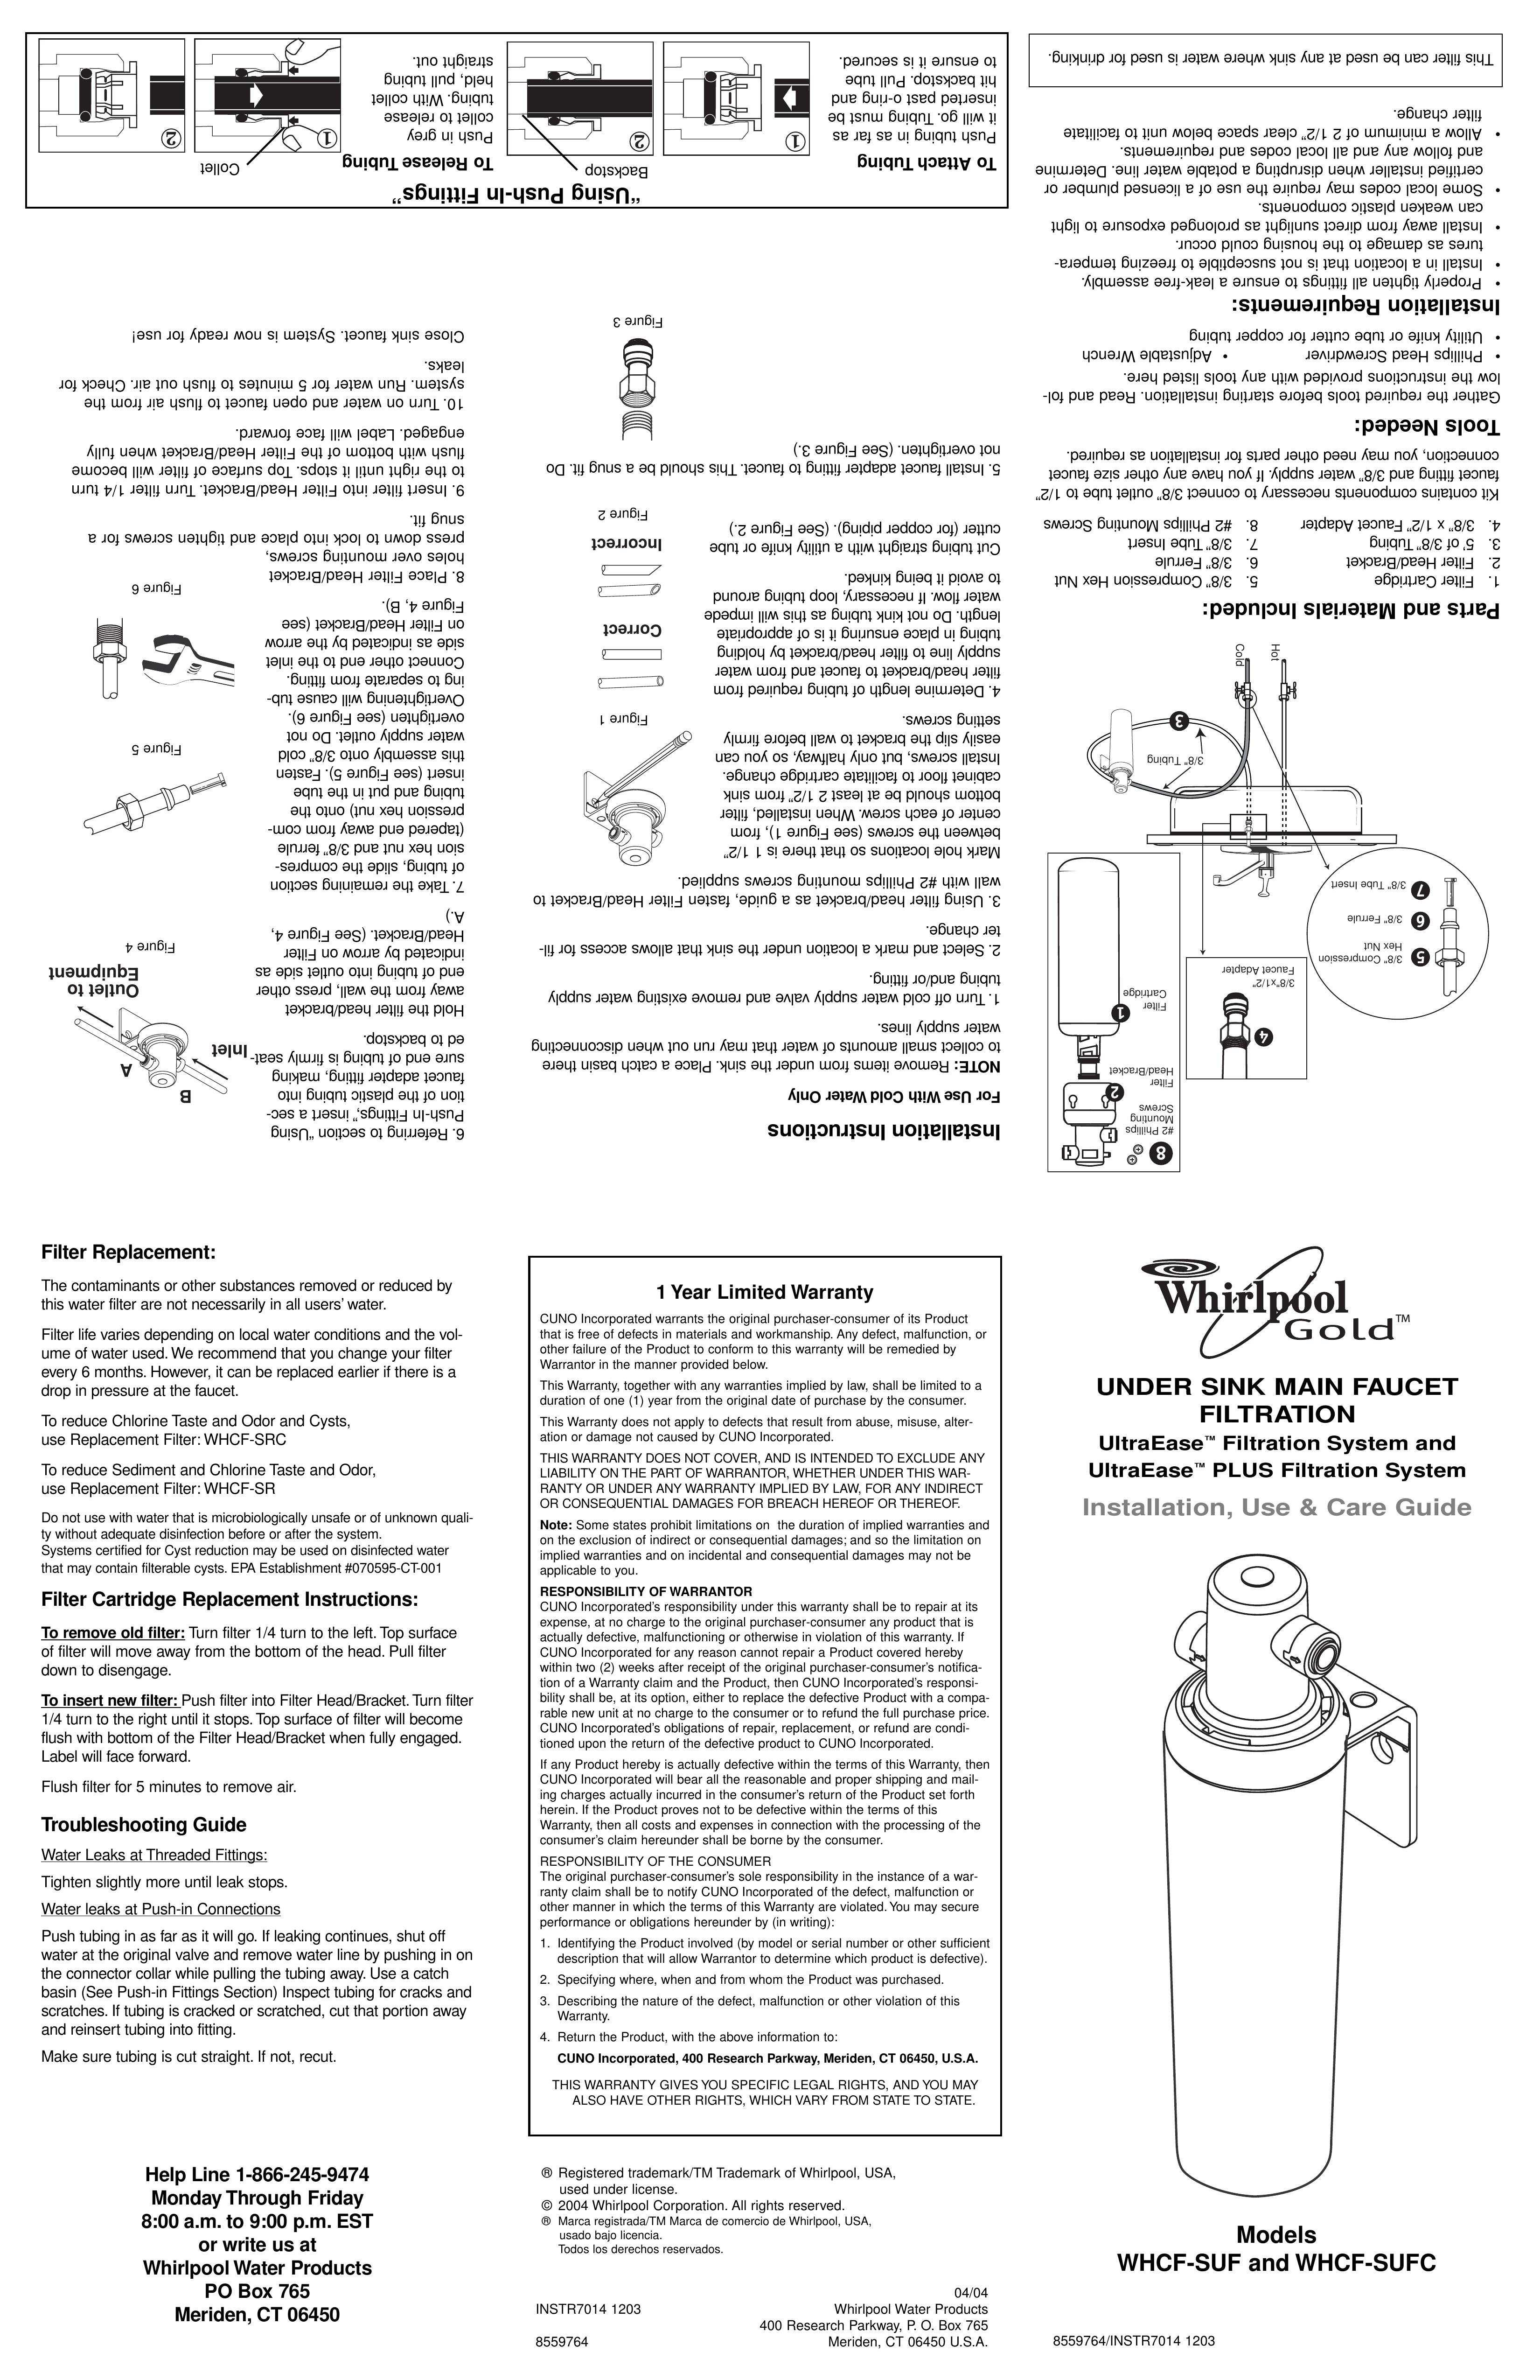 Whirlpool WHCF-SUF Water Dispenser User Manual